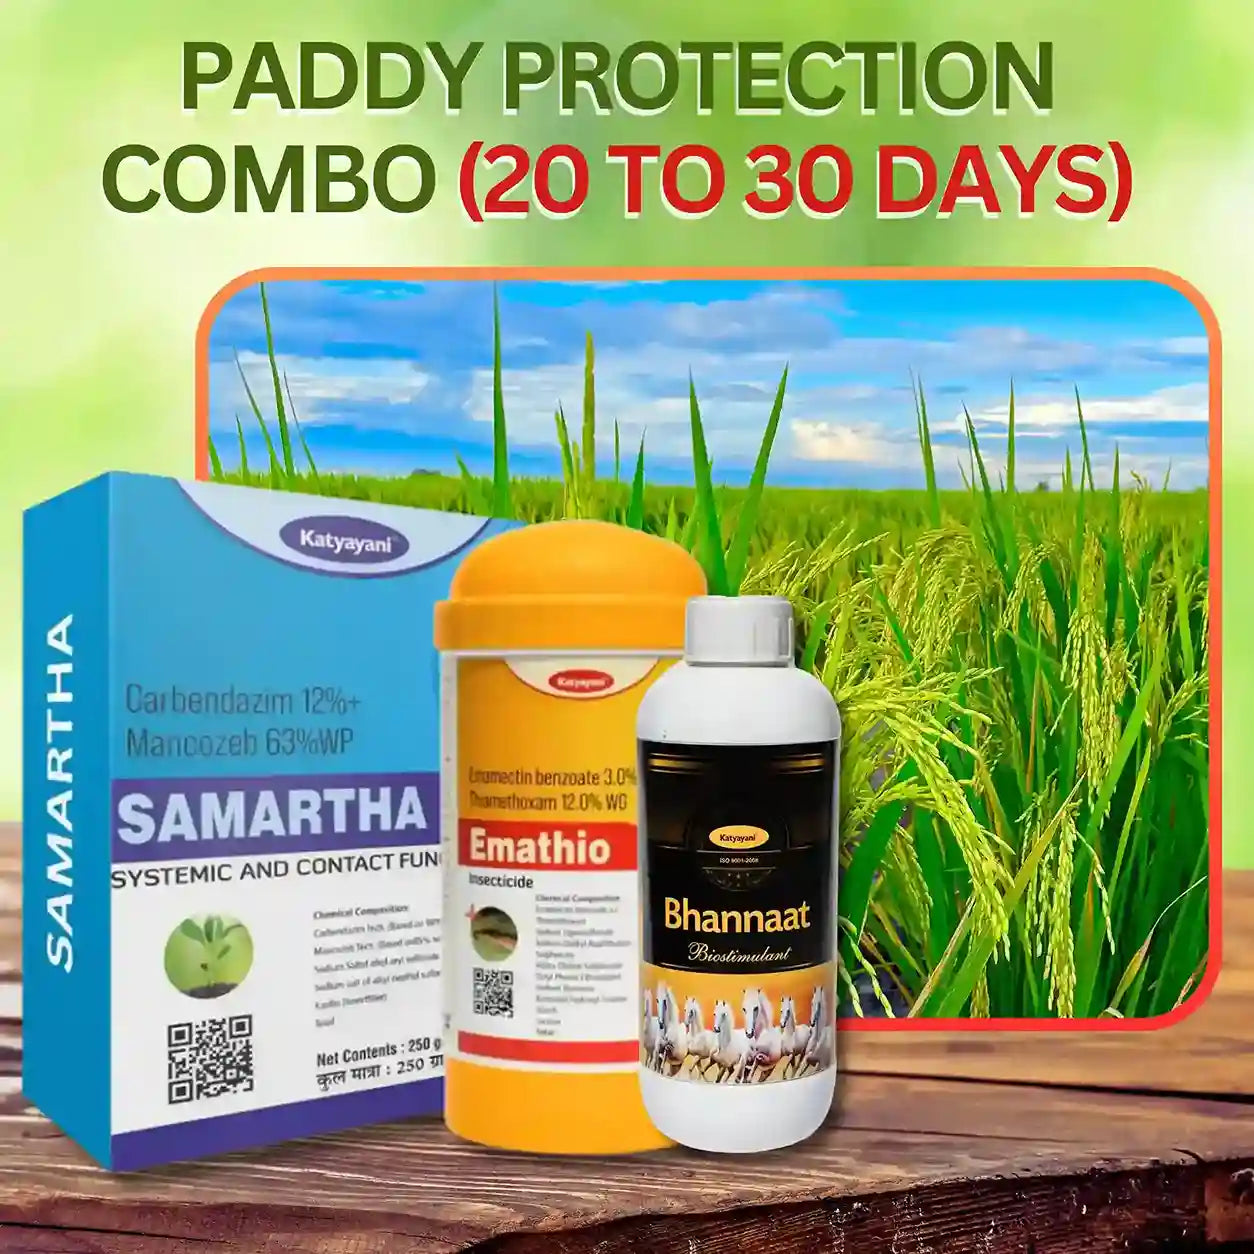 PADDY PROTECTION COMBO  (20 TO 30 DAYS) SAMARTHA(500 gm x 1), EMATHIO(100gm x 2), BHANNAT(250 ml x 1)